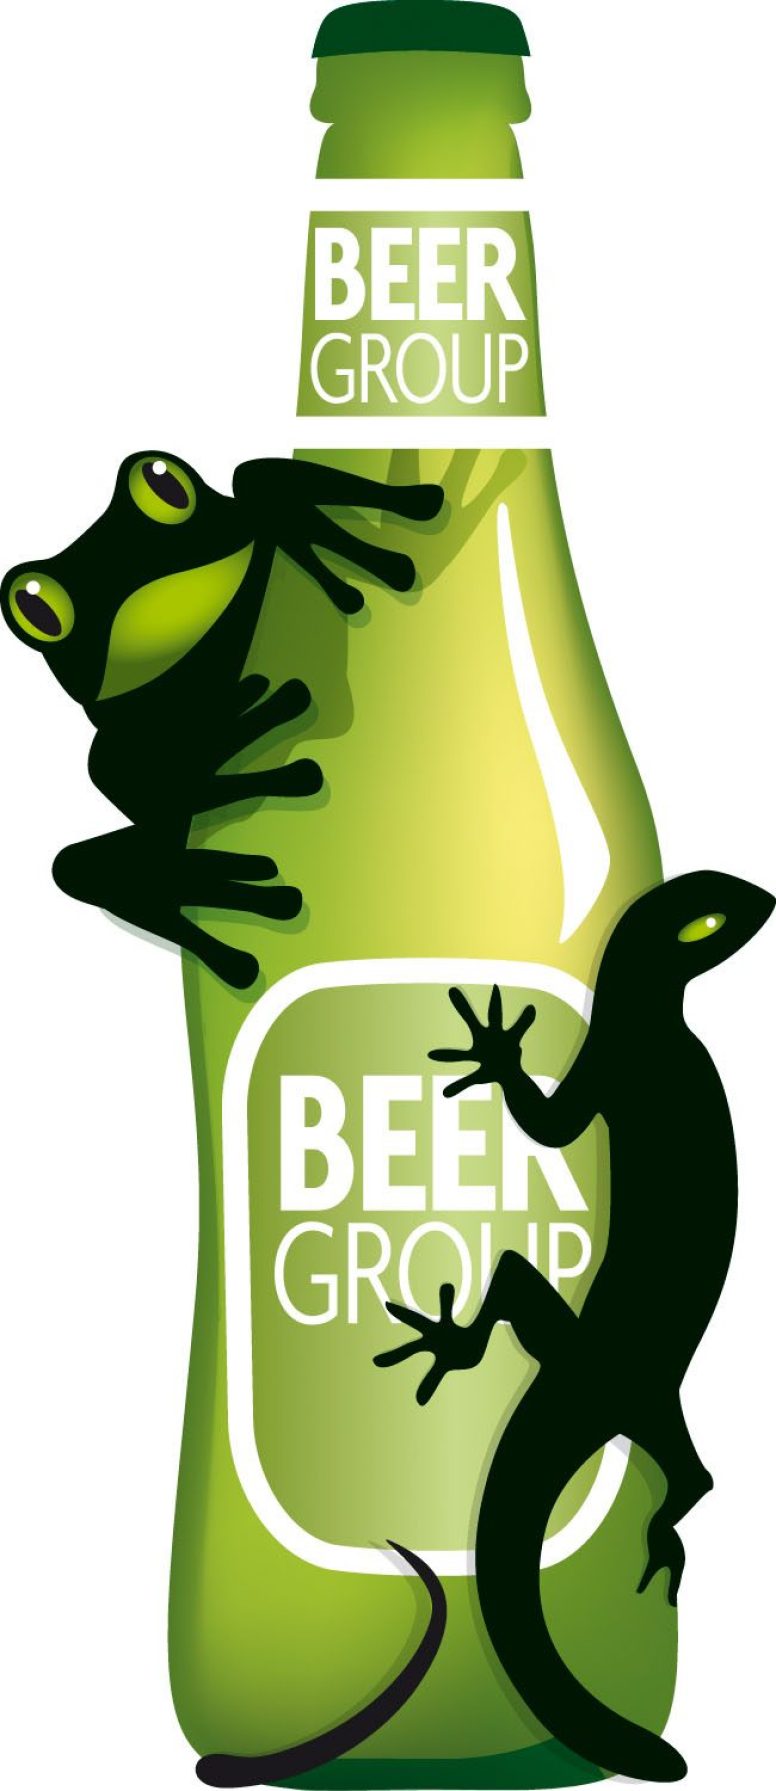 BEER Group Logo FINAL2